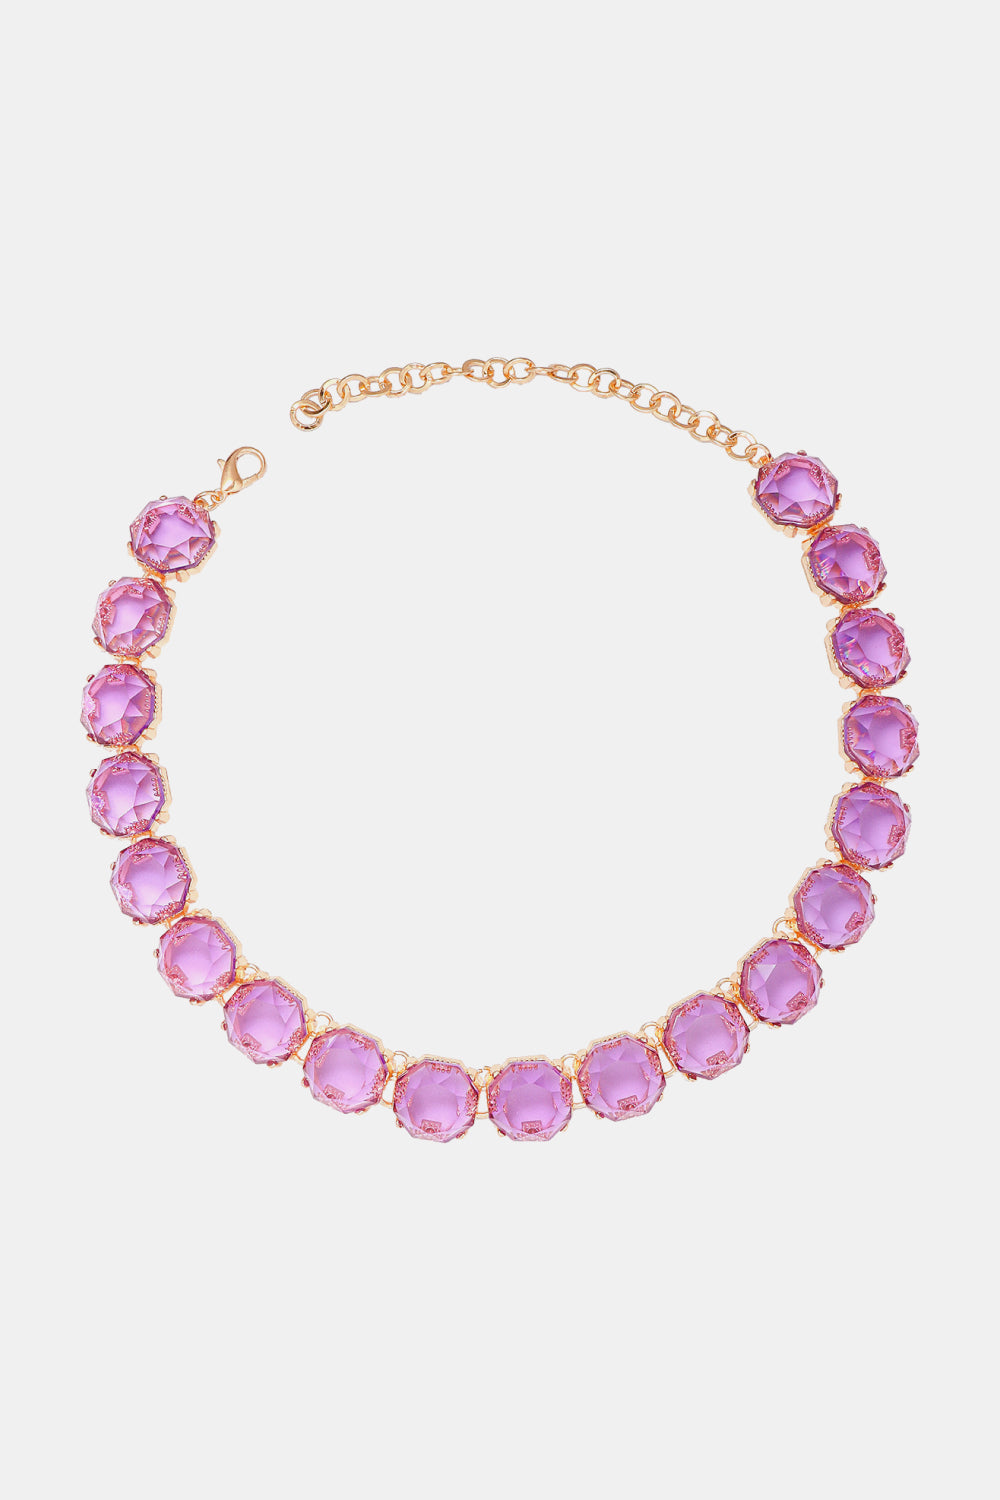 Trendsi Cupid Beauty Supplies Heliotrope Purple / One Size Women Necklace Zinc Alloy Resin Necklace